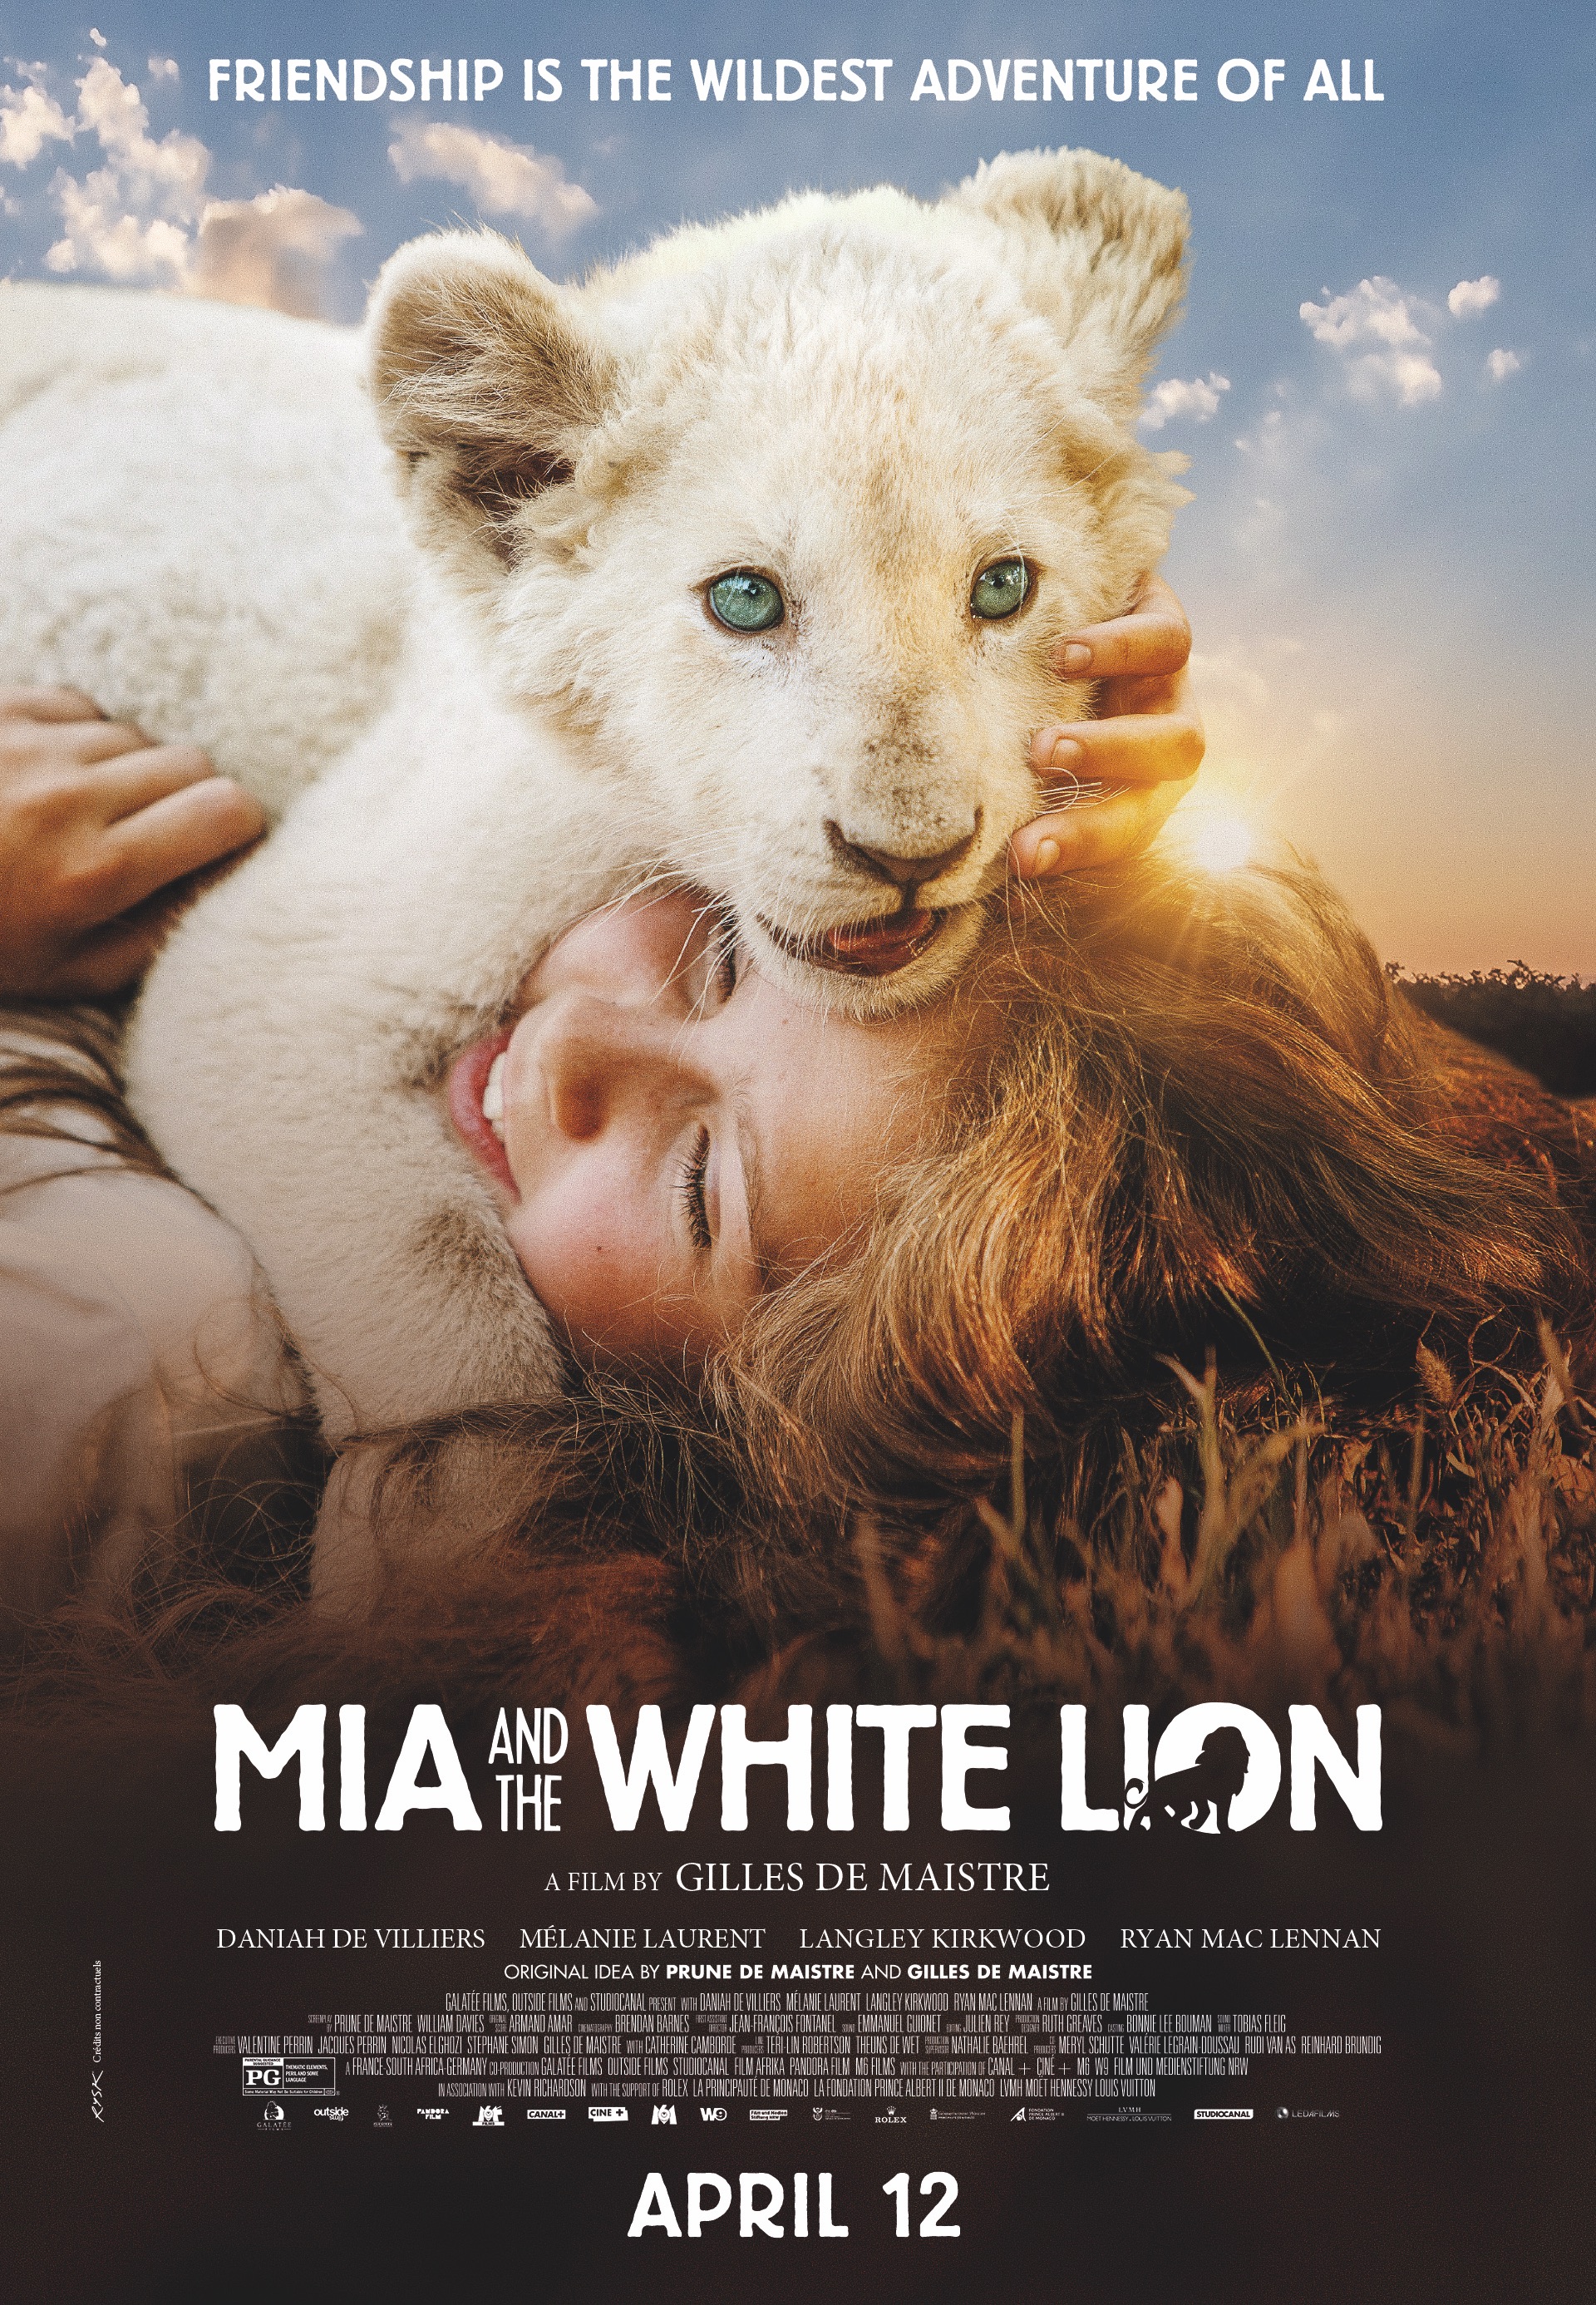 Nonton film Mia and the White Lion layarkaca21 indoxx1 ganool online streaming terbaru